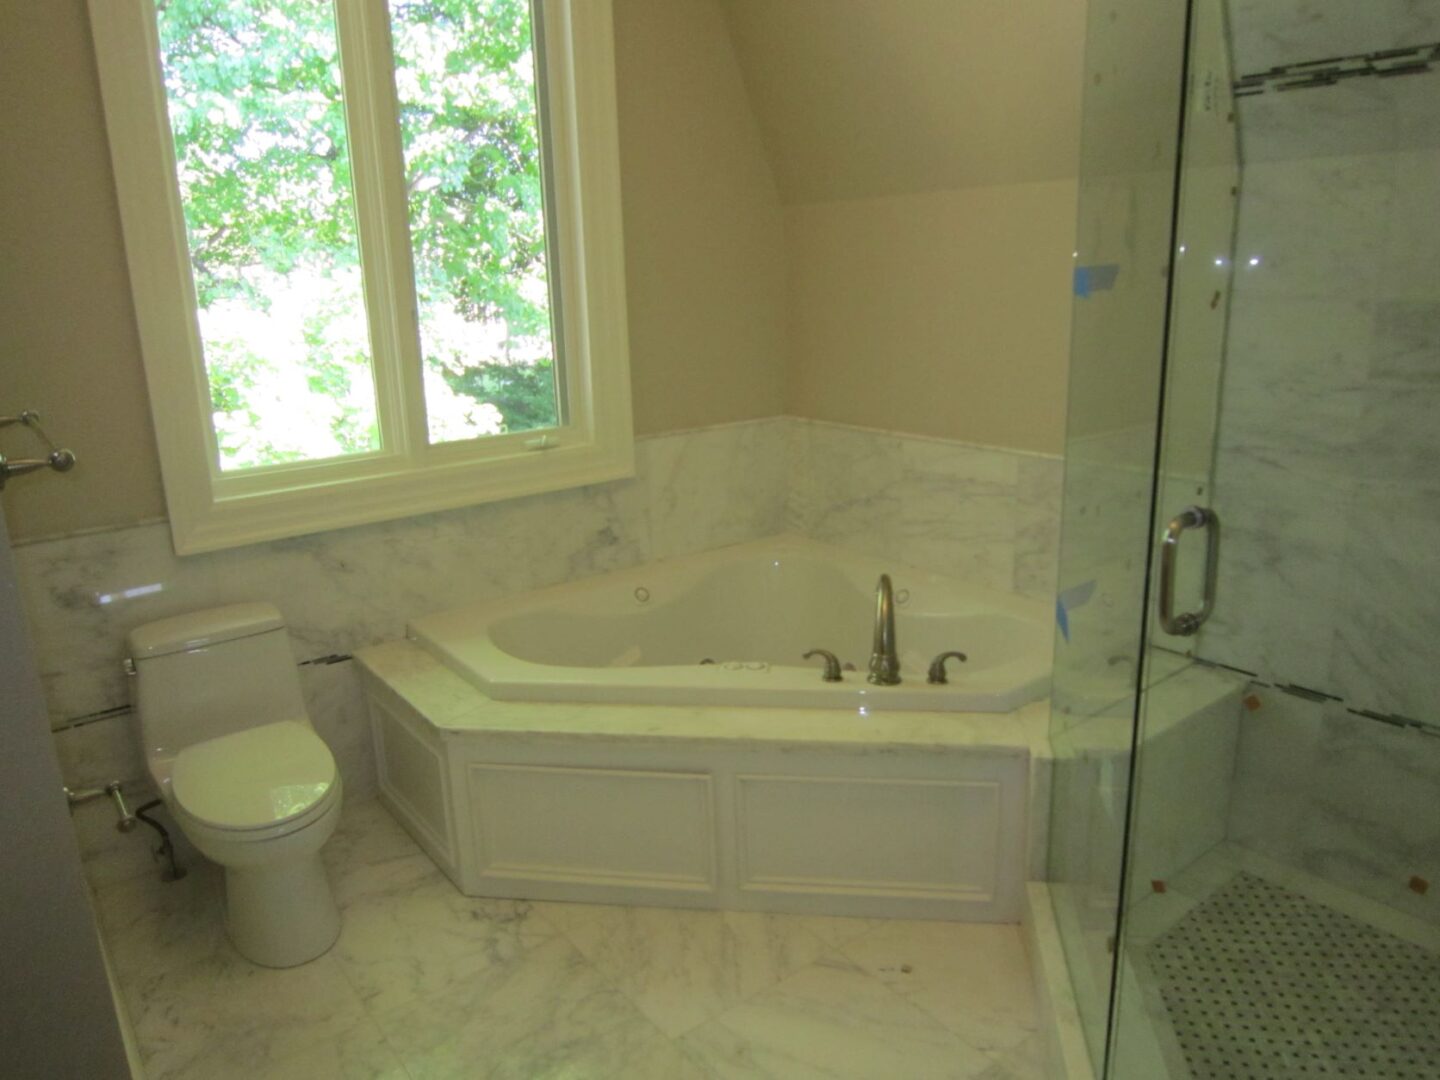 A Corner Bath Tub With Glass Doors Shower